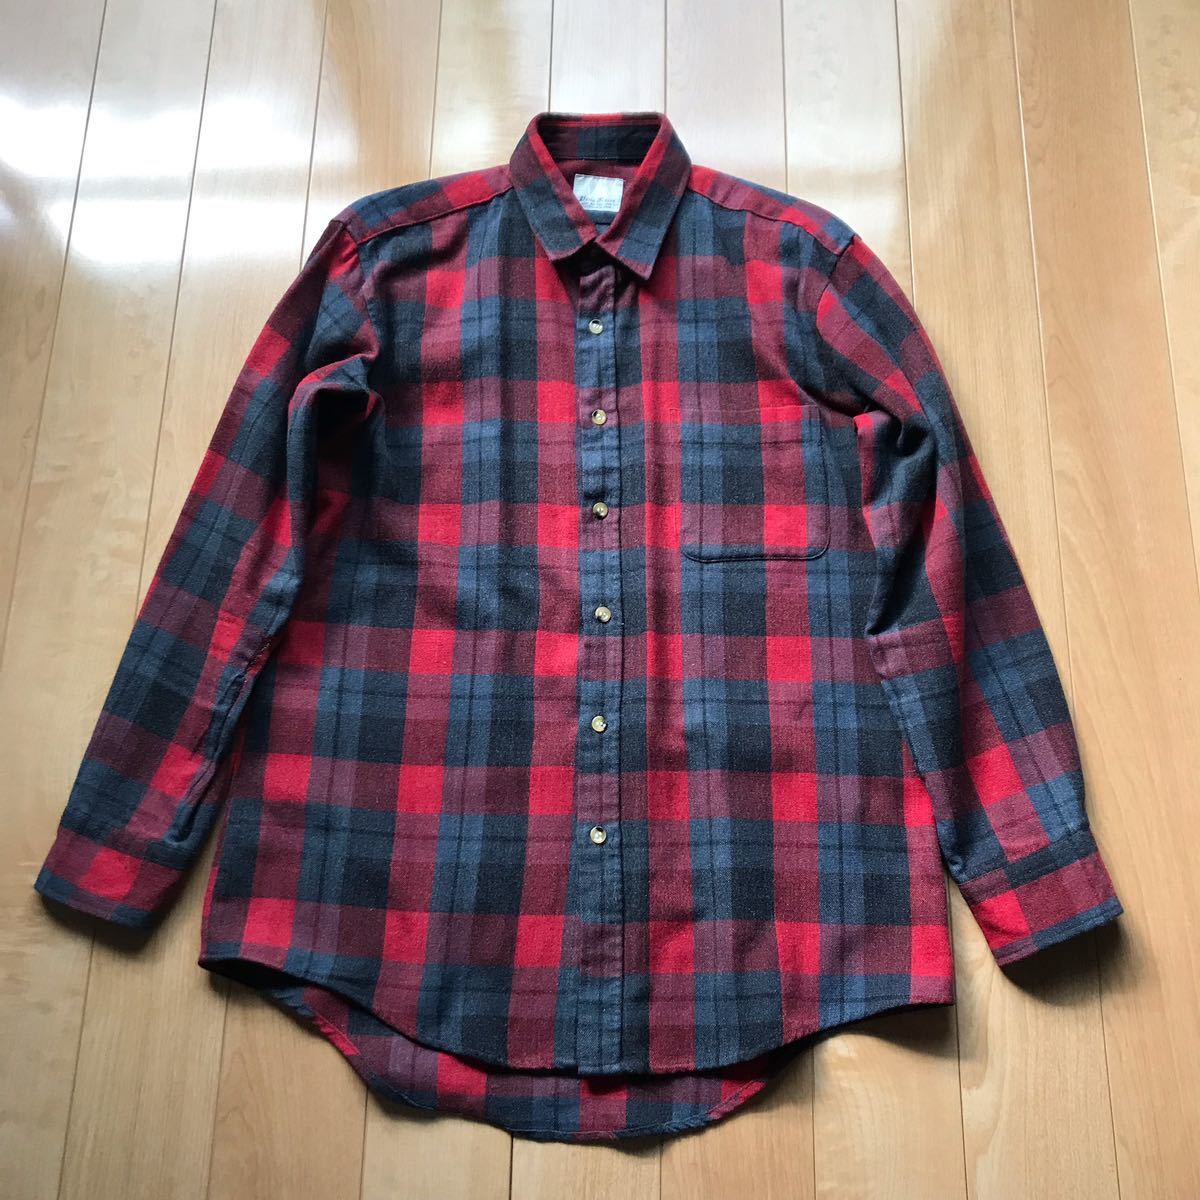 Vino Rosso ネルシャツ 578-1-33 メンズ レッド ブラック チェック ショッピング レジャー_画像1